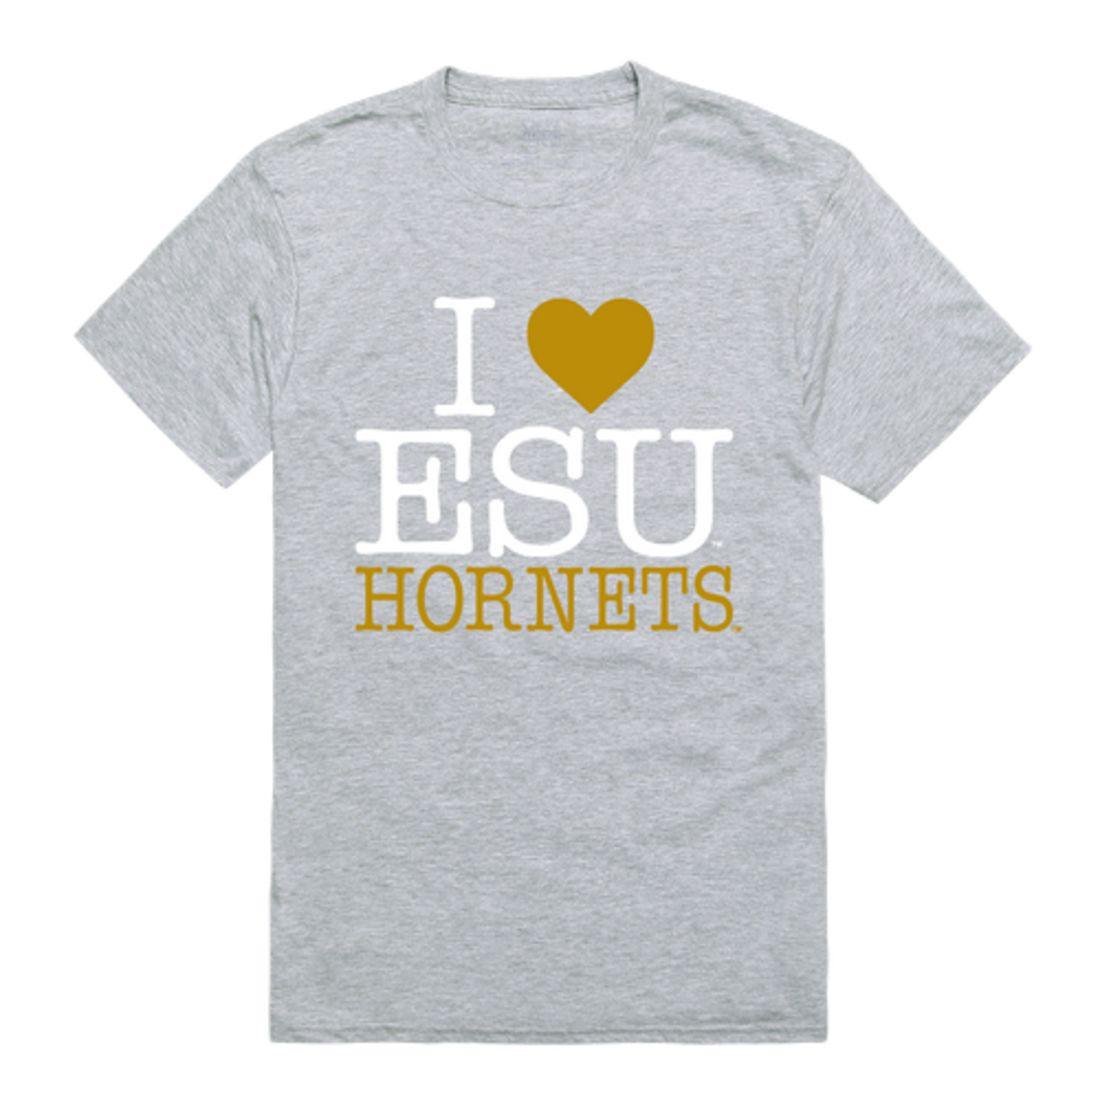 I Love Emporia State University Hornets T-Shirt-Campus-Wardrobe